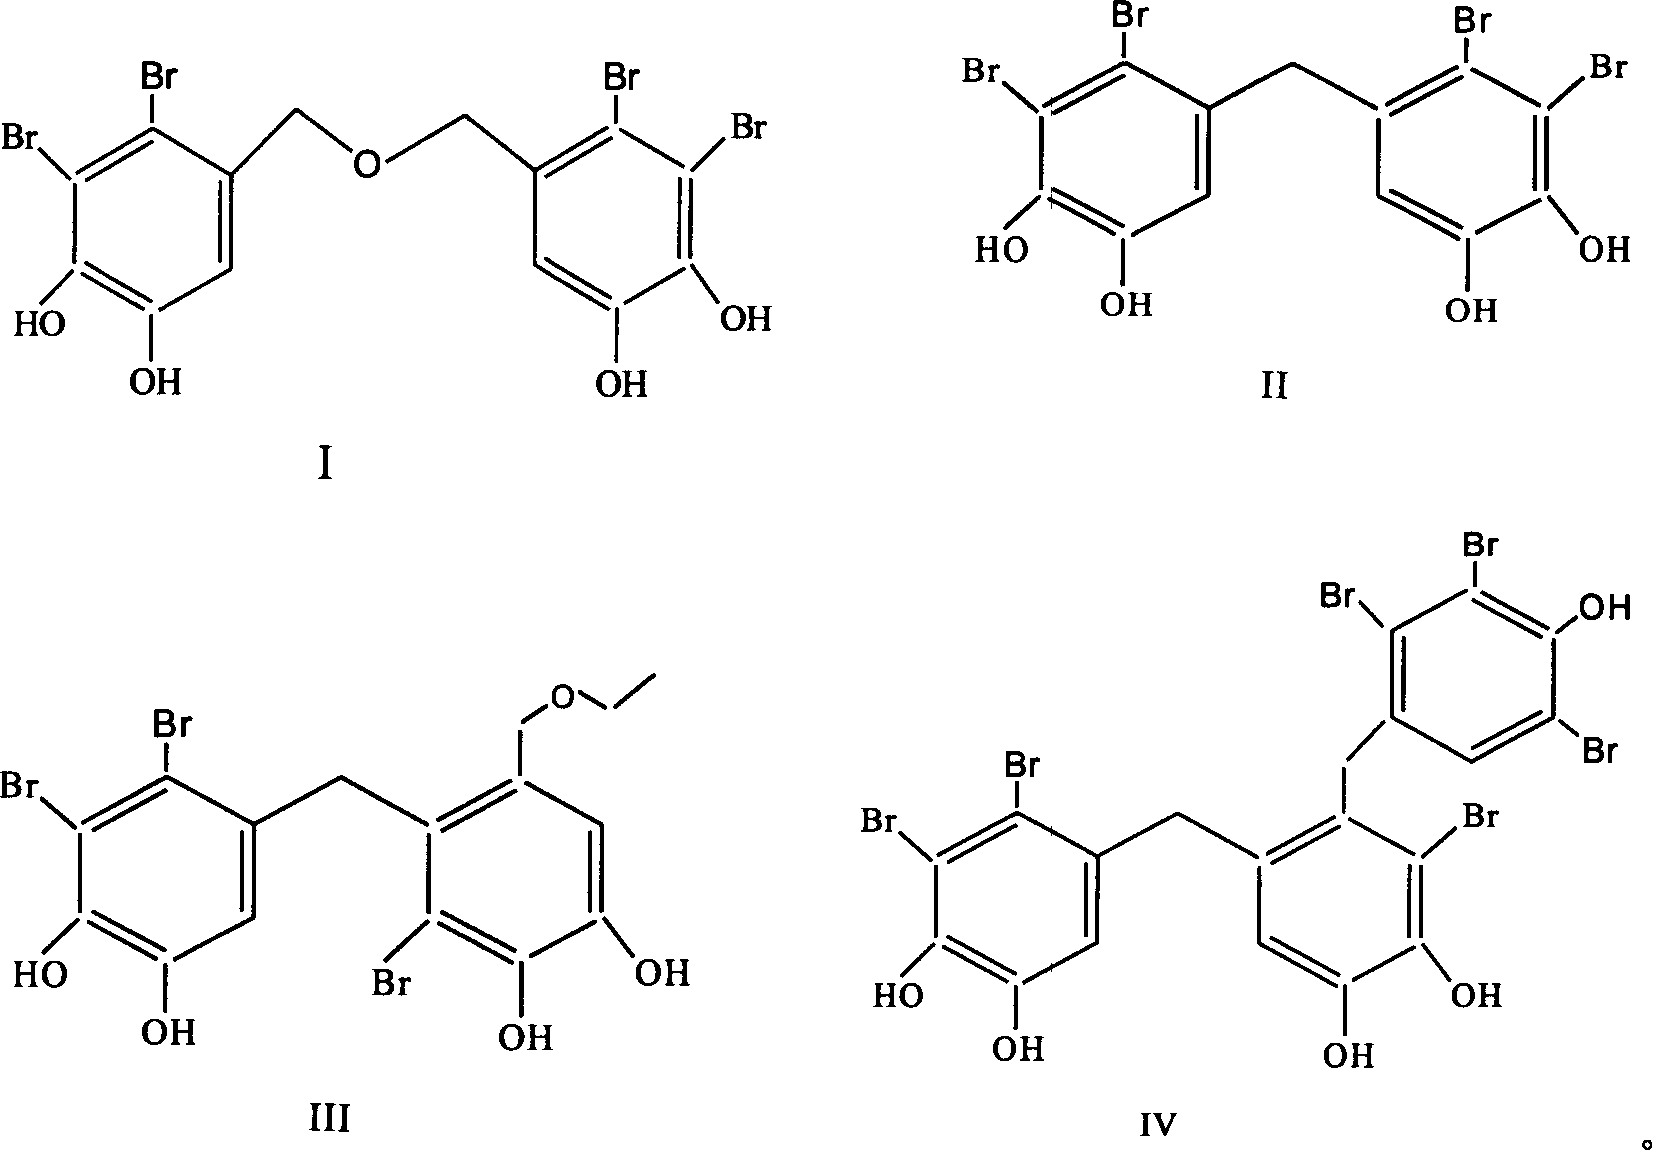 Use of bromphenol compound in protein-tyrosine phosphonatease inhibitor